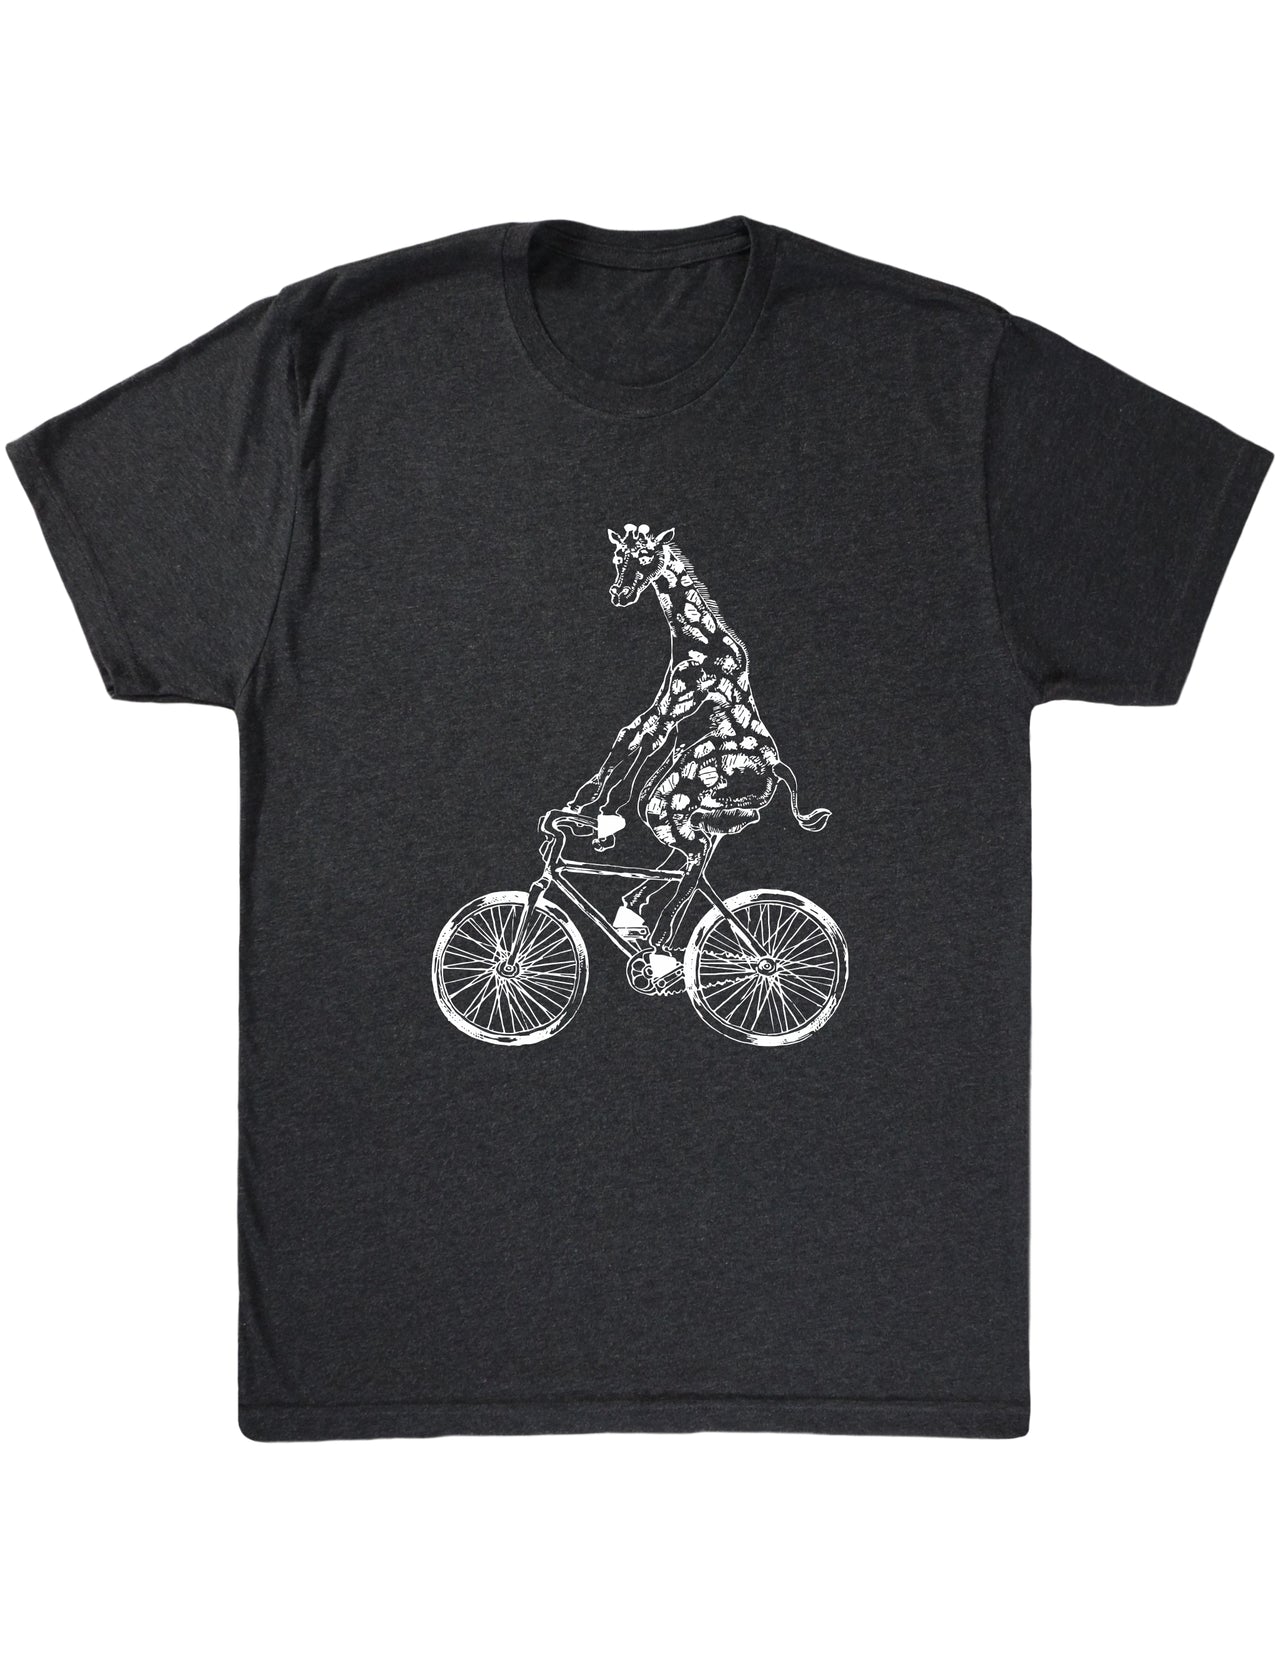 seembo-giraffe-on-a-bicycle-bike-design-vintage-black-t-shirt